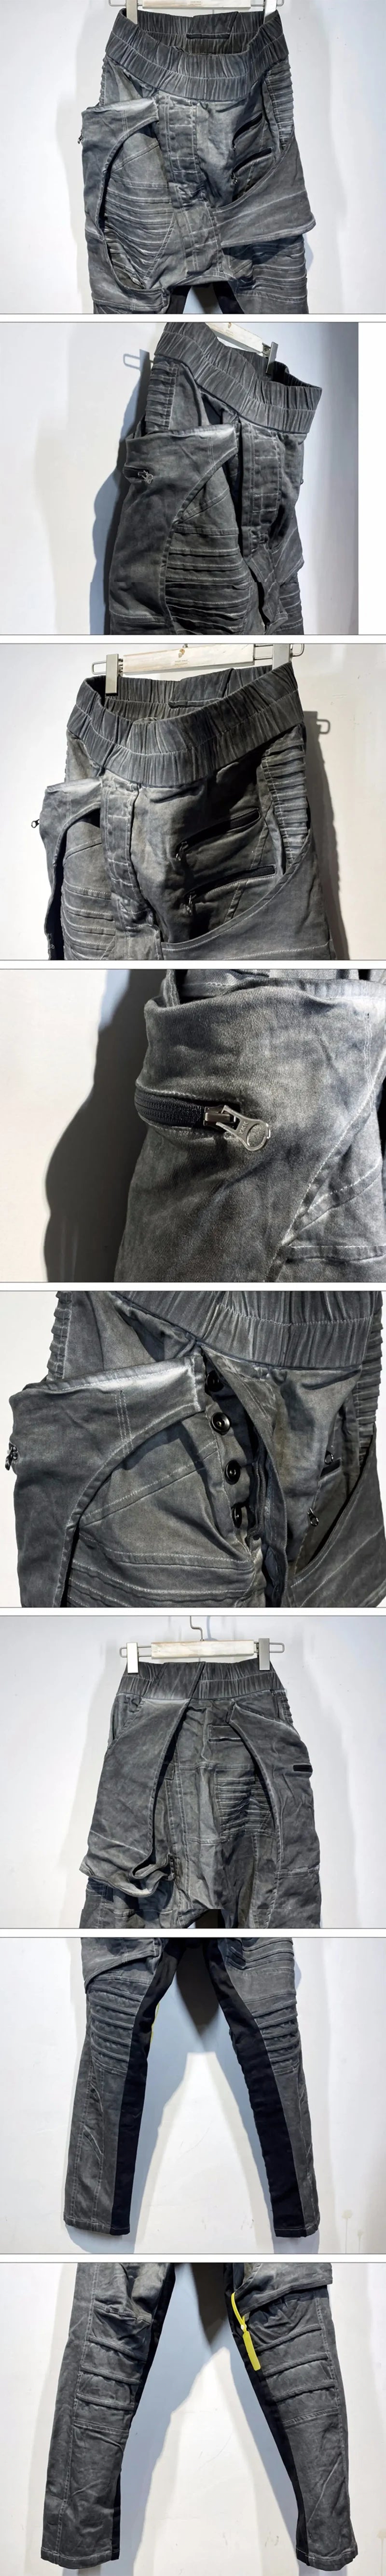 details of the Cyberpunk style pants "Hatsu" in Slate Gray